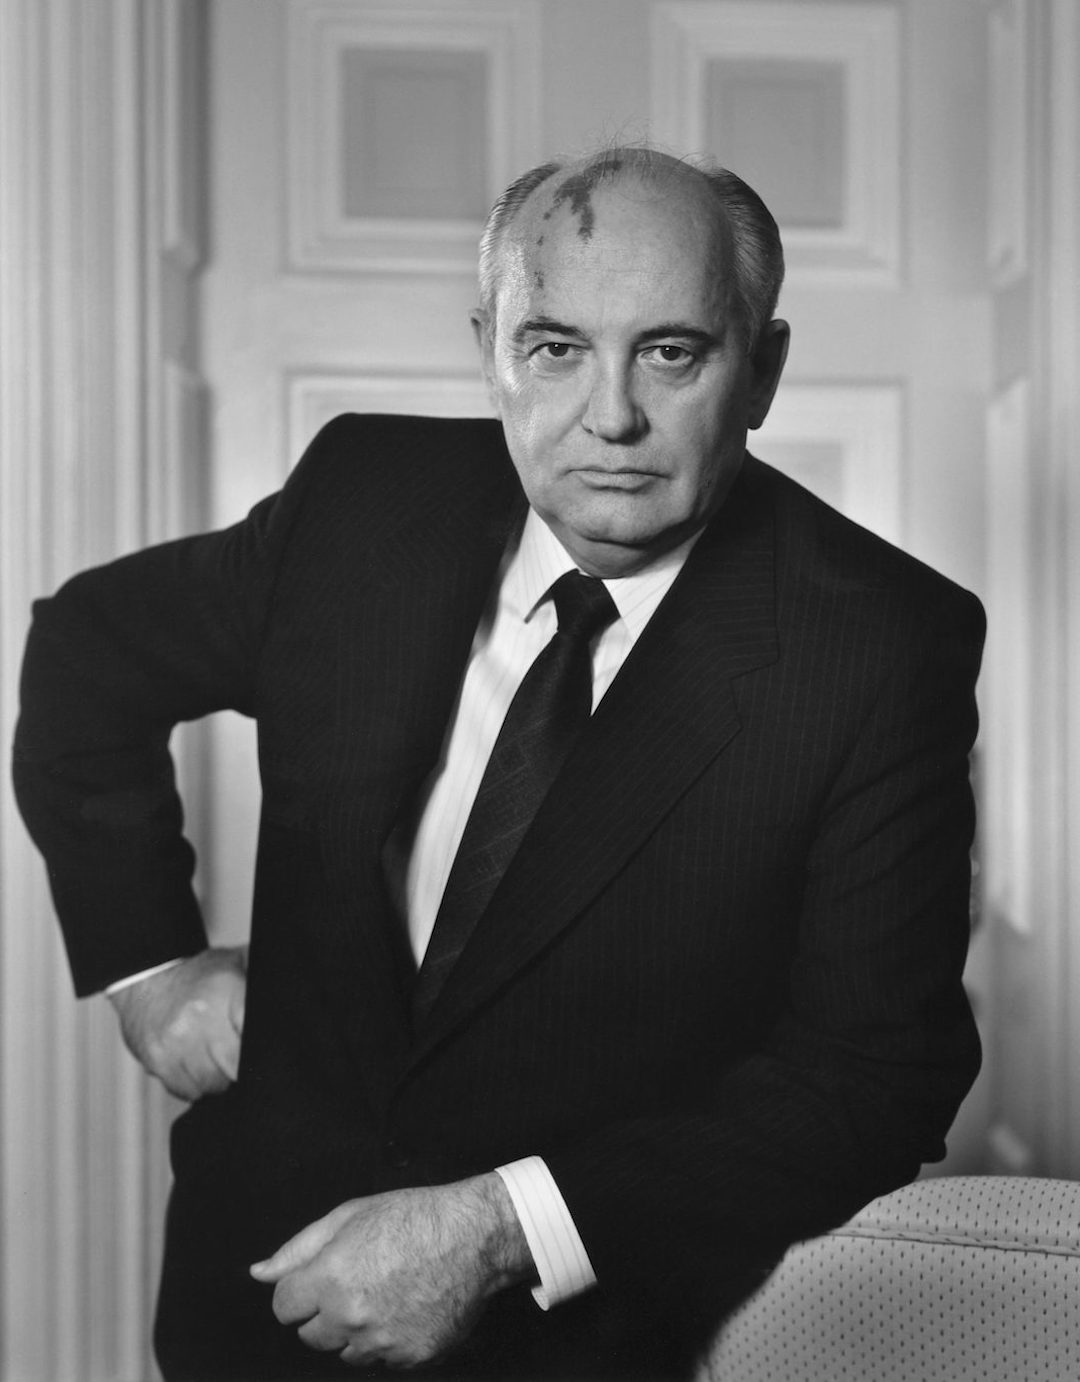 Mikhail Gorbachev 1931-2022, leader of the Soviet Union 1985-1991, Club of Rome member.